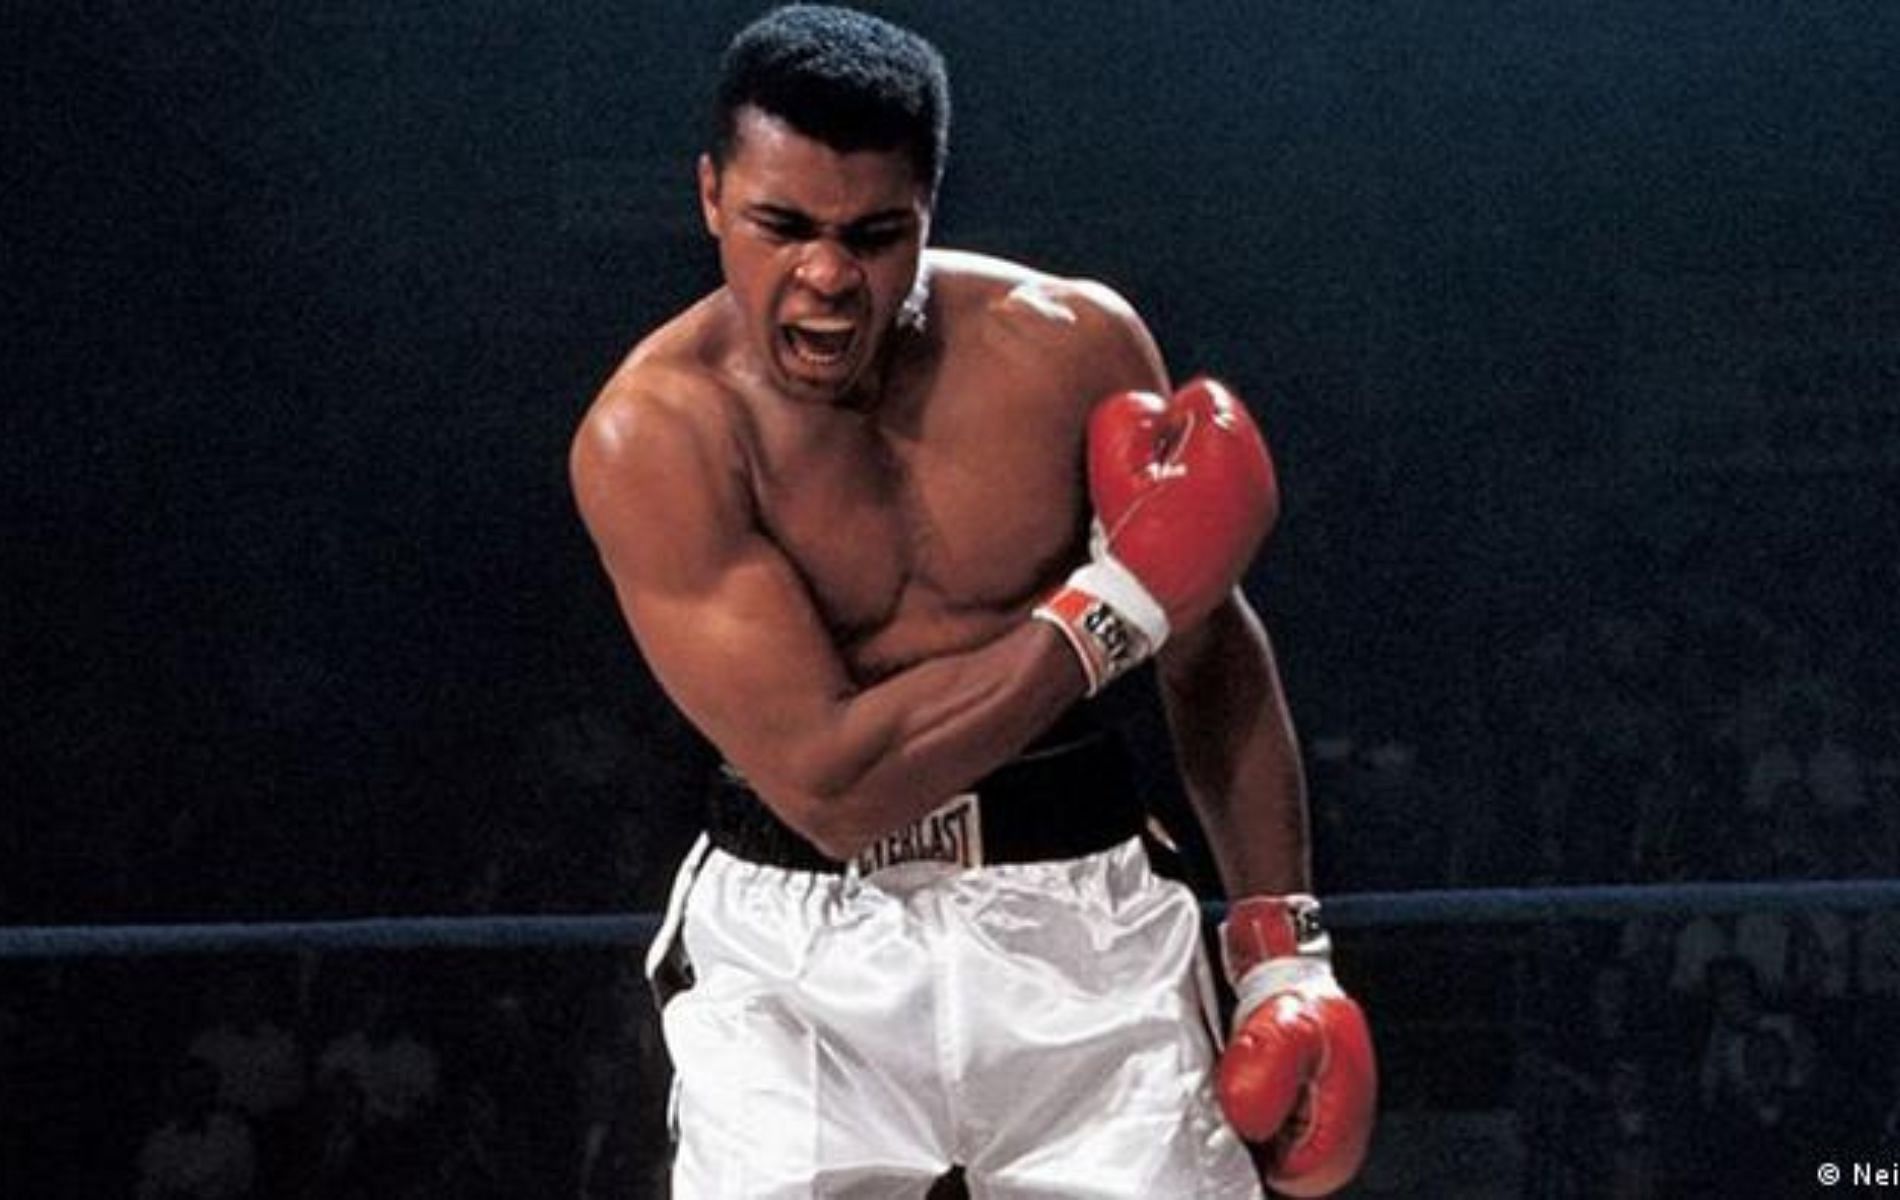 Why did Muhammad Ali change his name?